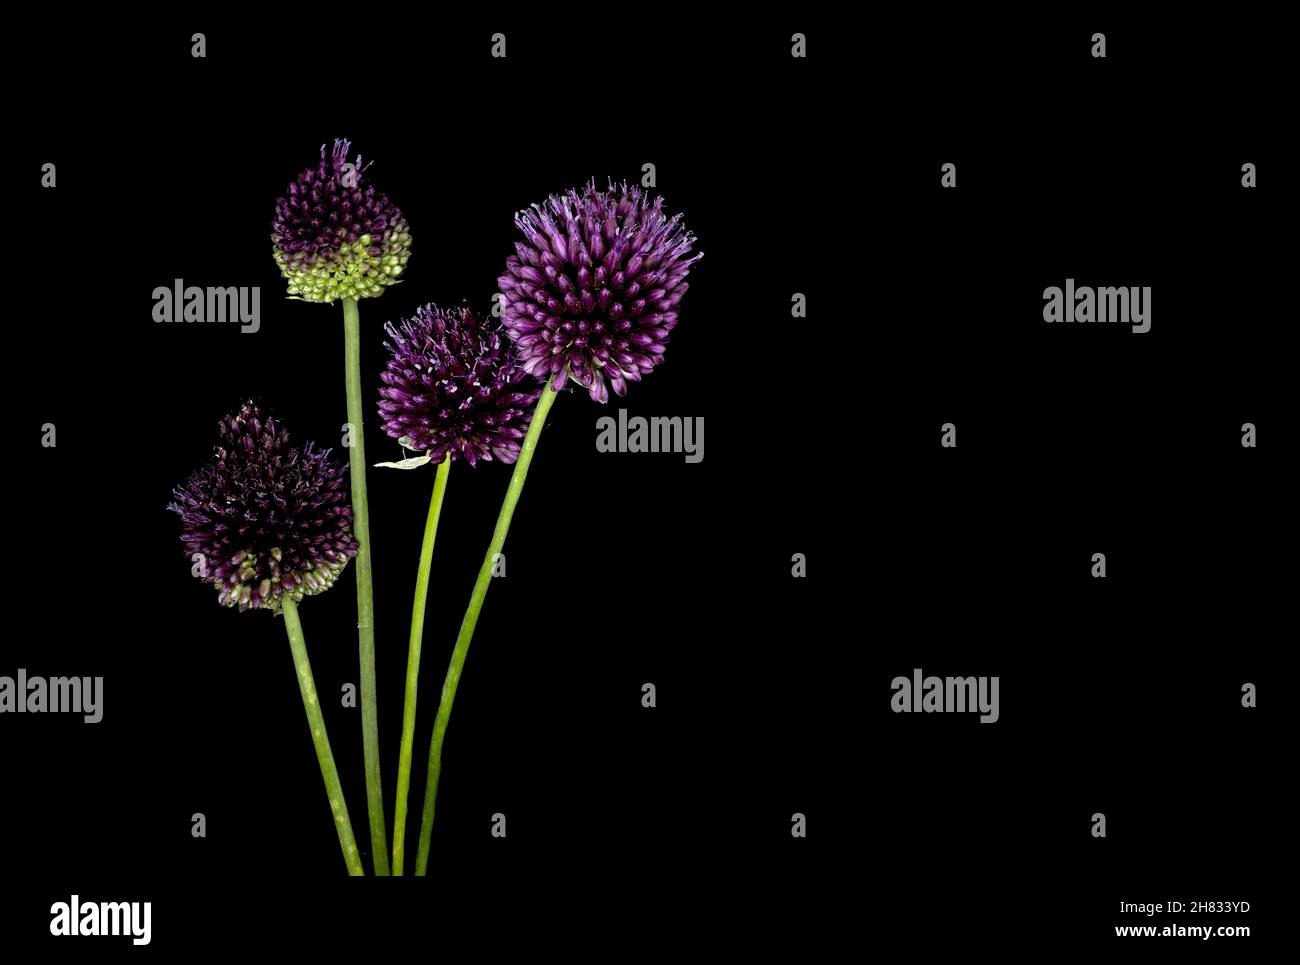 Allium rotundum flower an plant, common name round headed leek or purple flowered garlic, shot studio on black background Stock Photo